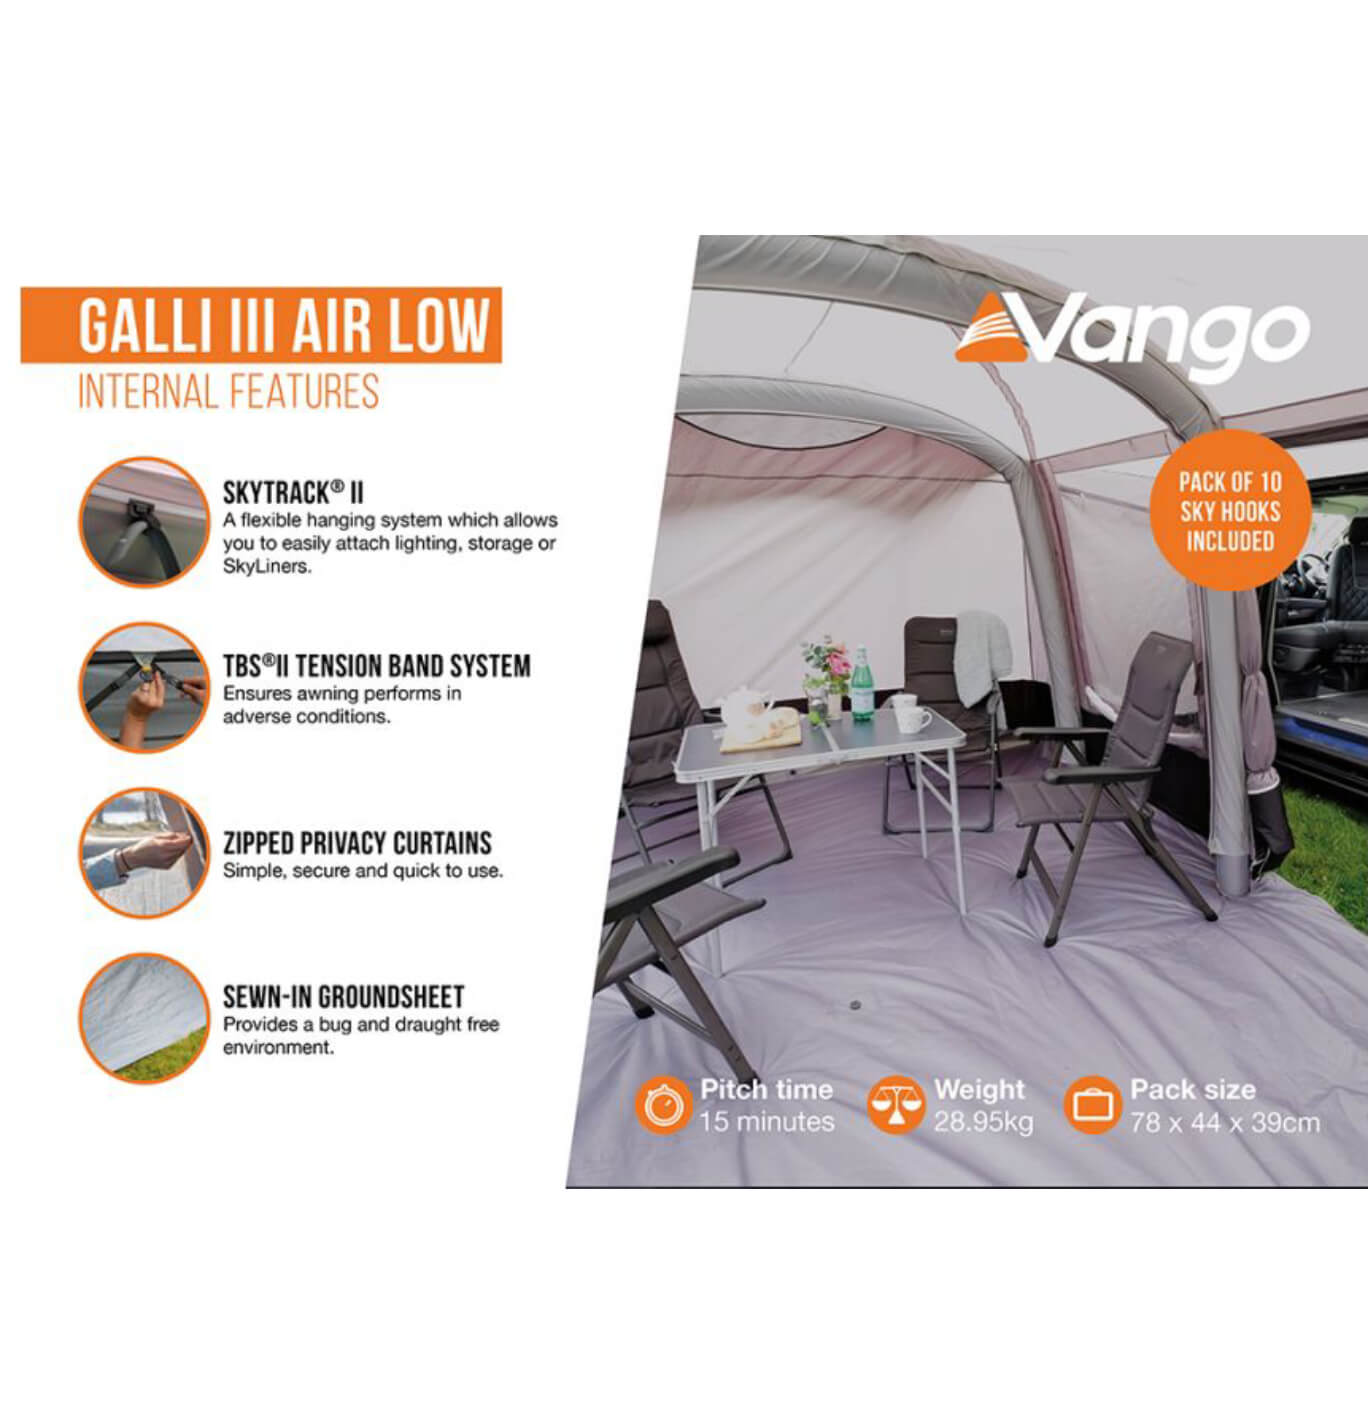 Vango Galli III Low AirWay Drive Away Awning Image